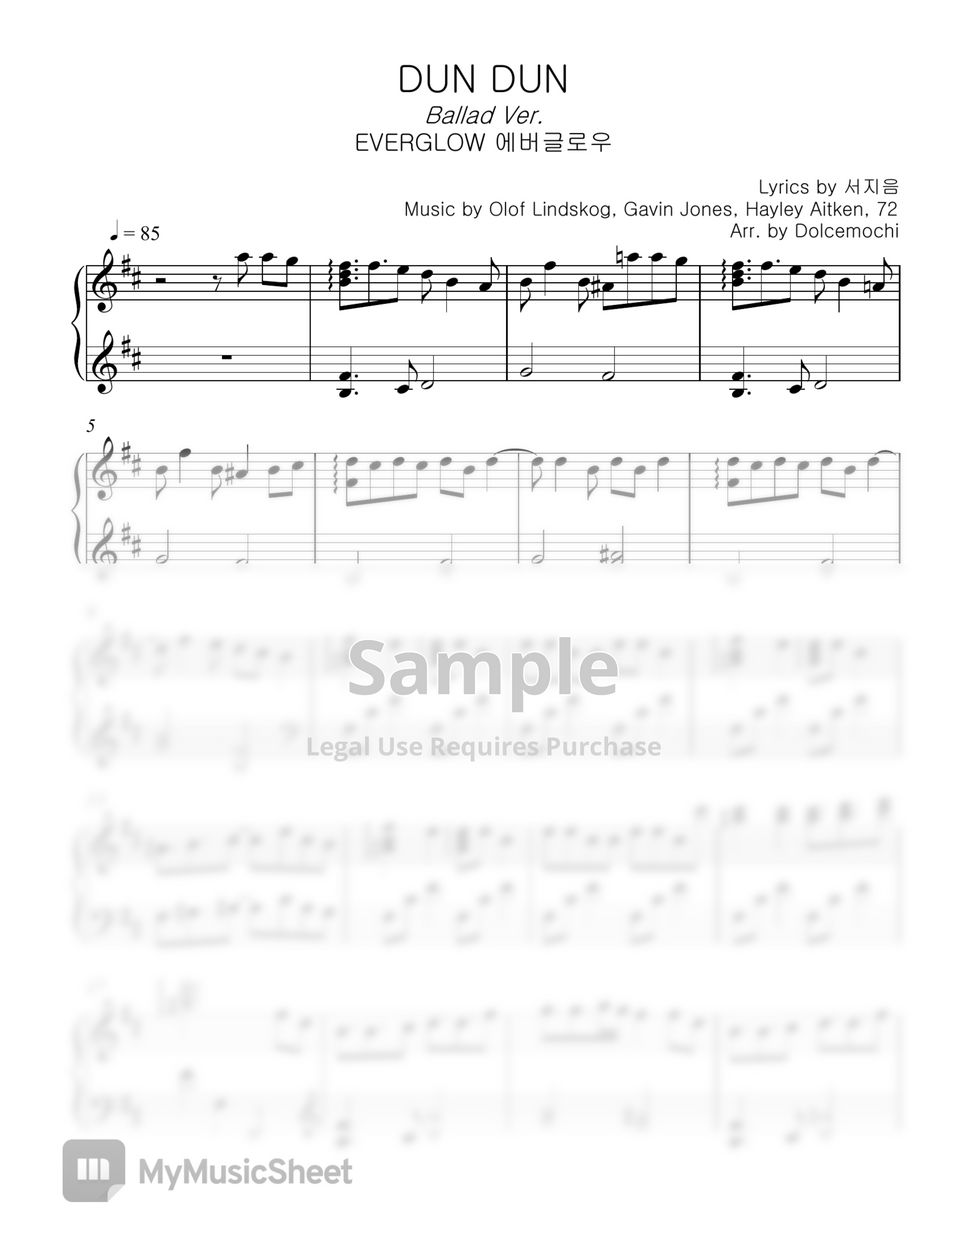 EVERGLOW (에버글로우) - DUN DUN (Ballad Ver.) - PIANO by Dolcemochi